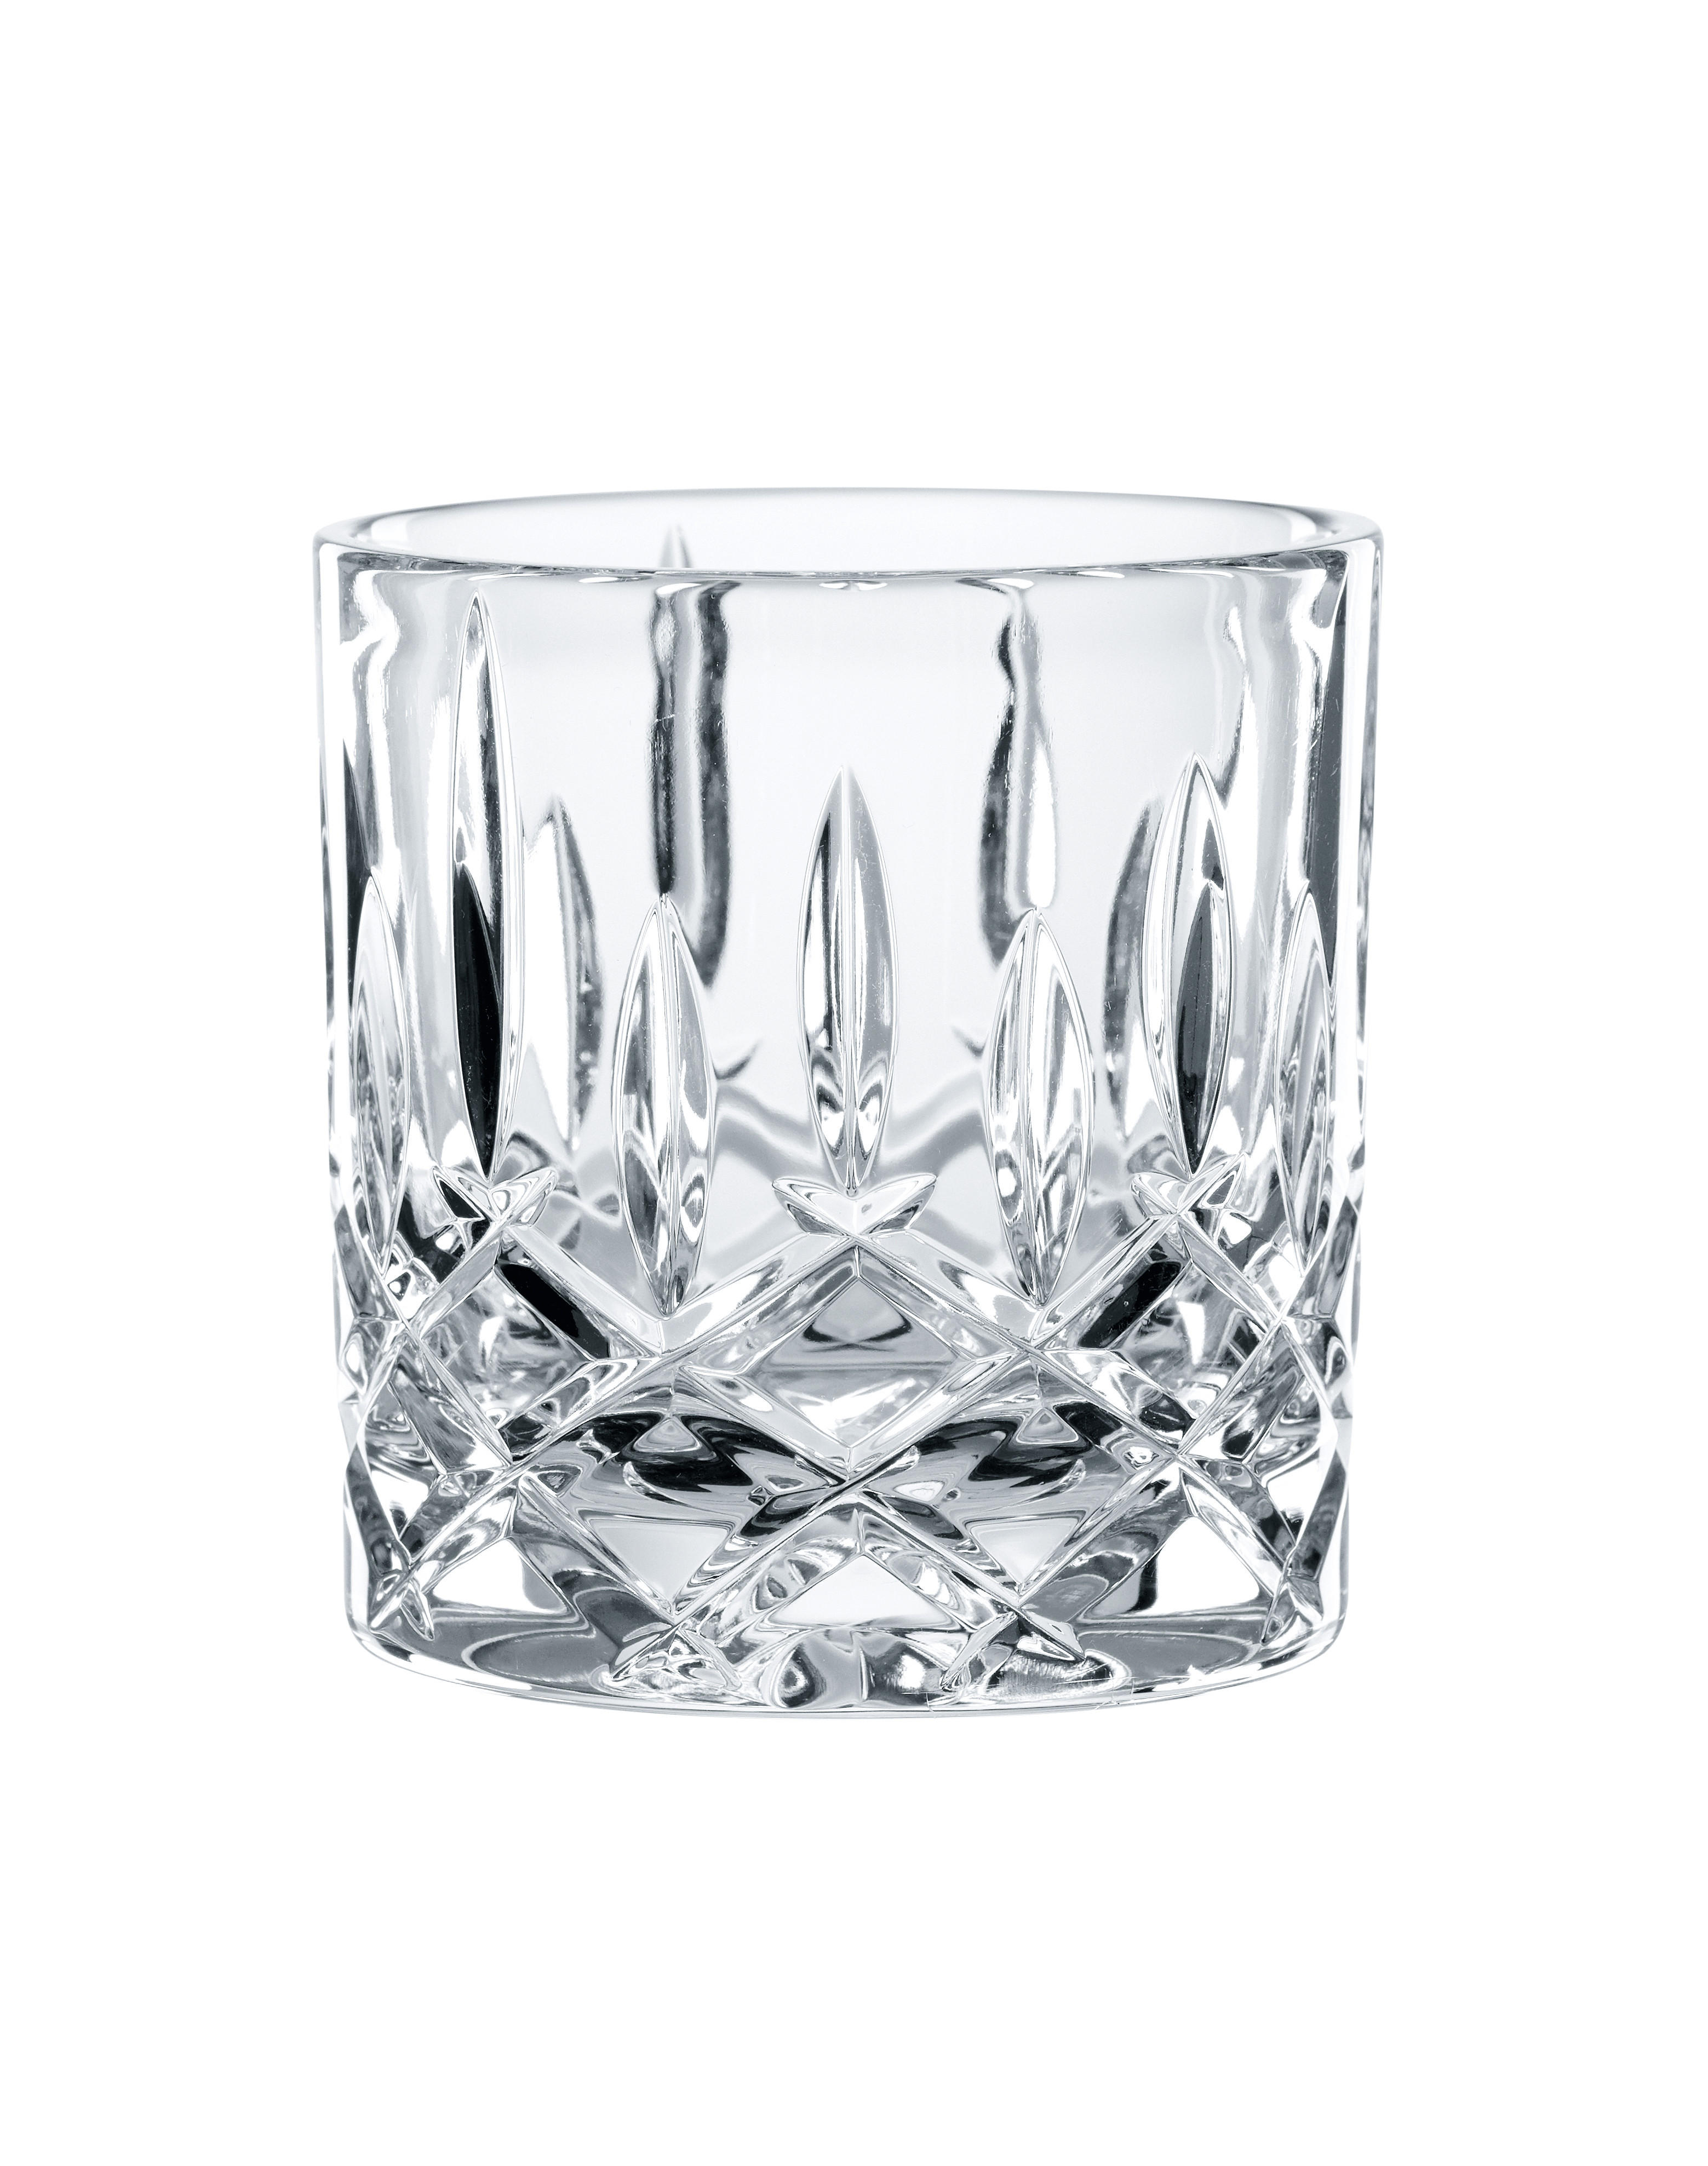 WHISKY-GLÄSERSET NOBLESSE  4-teilig  - Transparent, Glas (8/8,4cm) - Nachtmann